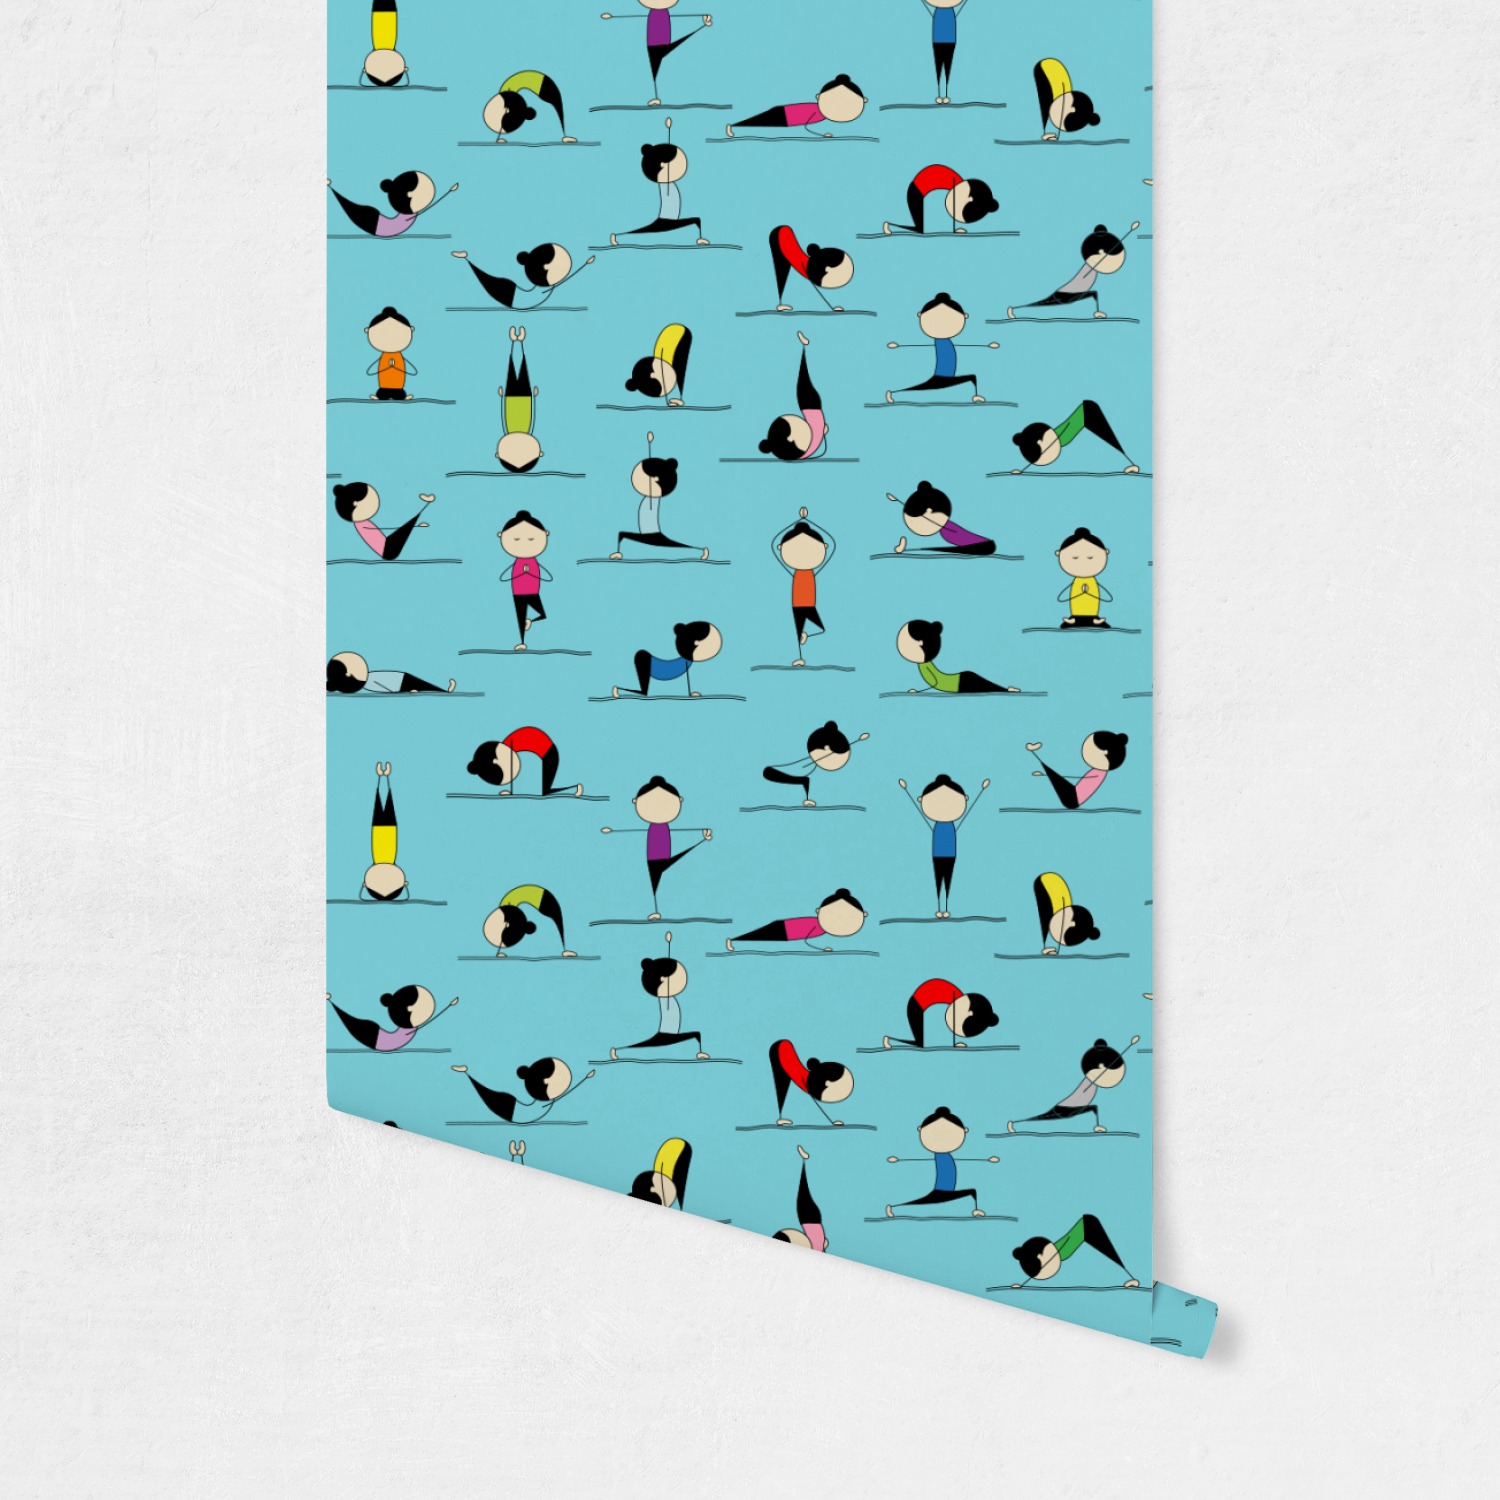 Wallpaper girl, pose, yoga, balance for mobile and desktop, section спорт,  resolution 3709x2819 - download